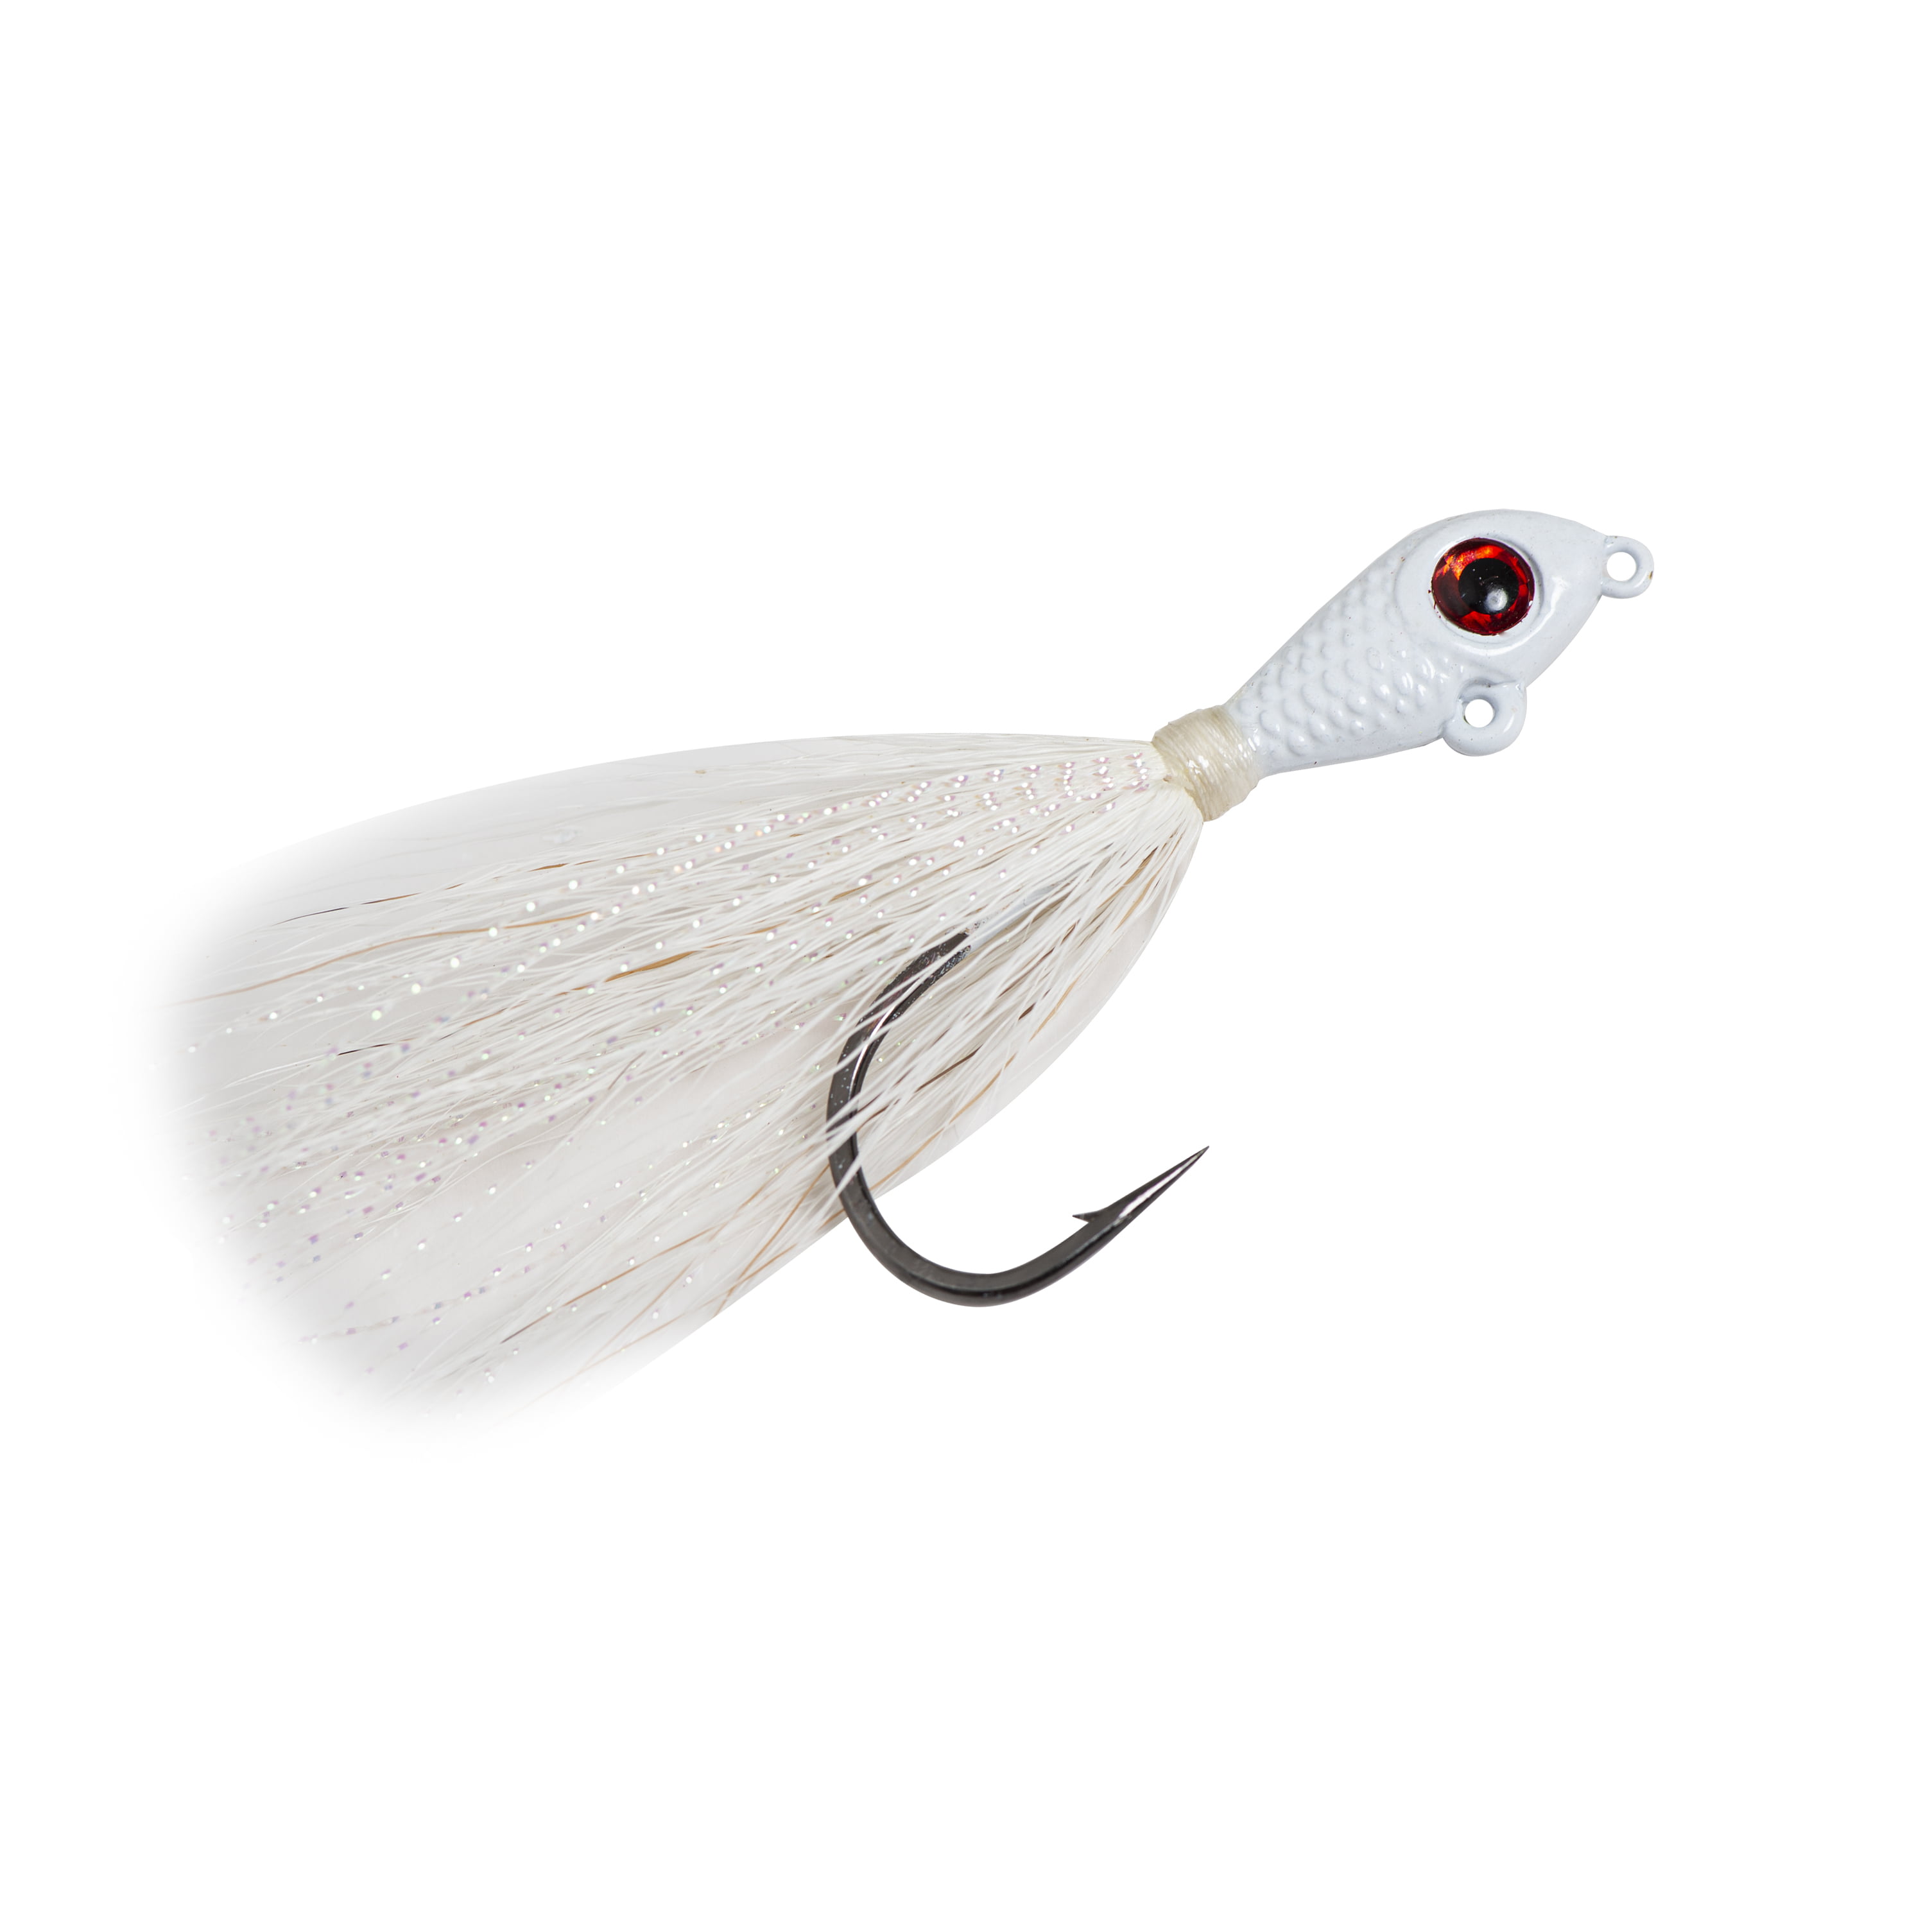 Mustad Big Eye Bucktail Fishing Lure (White/Chartreuse) - Size